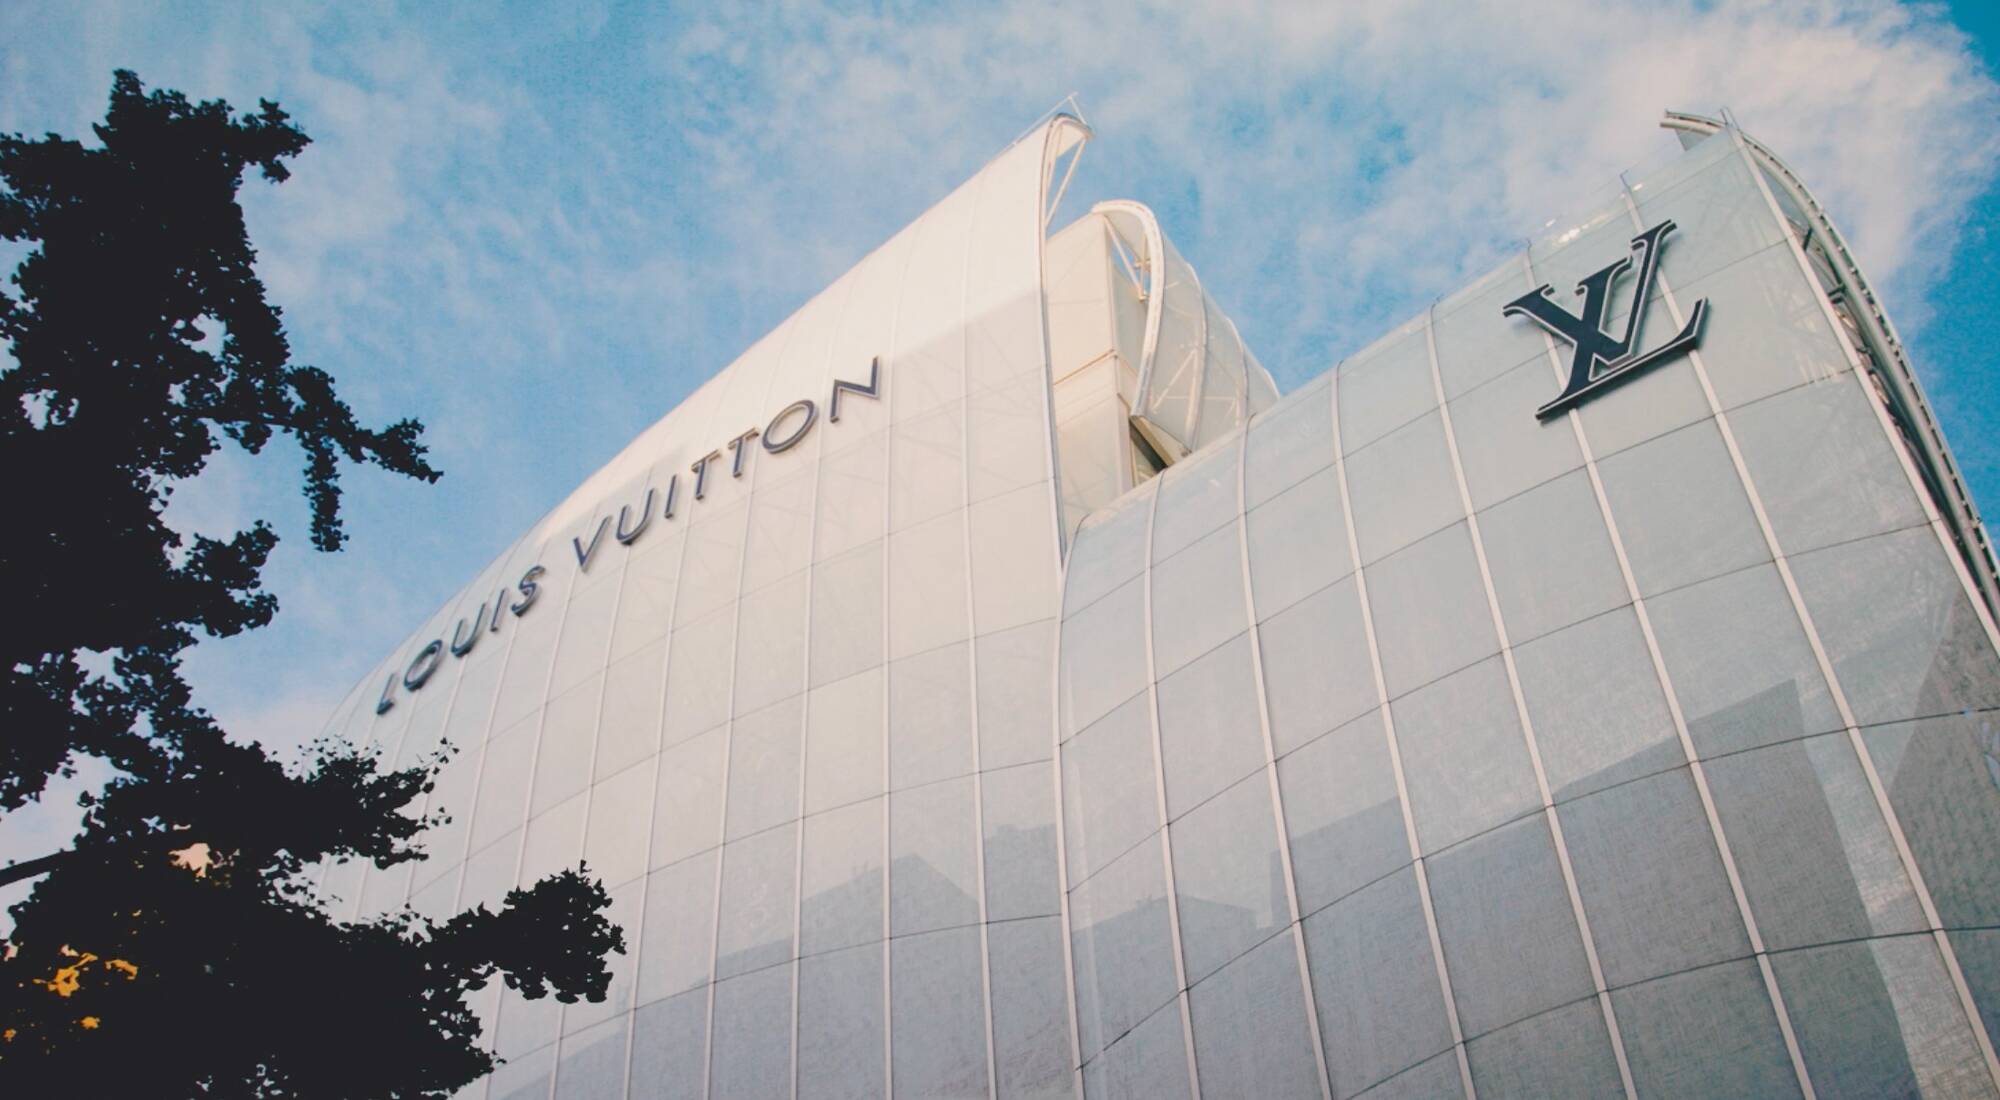 Jun Aoki's Louis Vuitton Ship